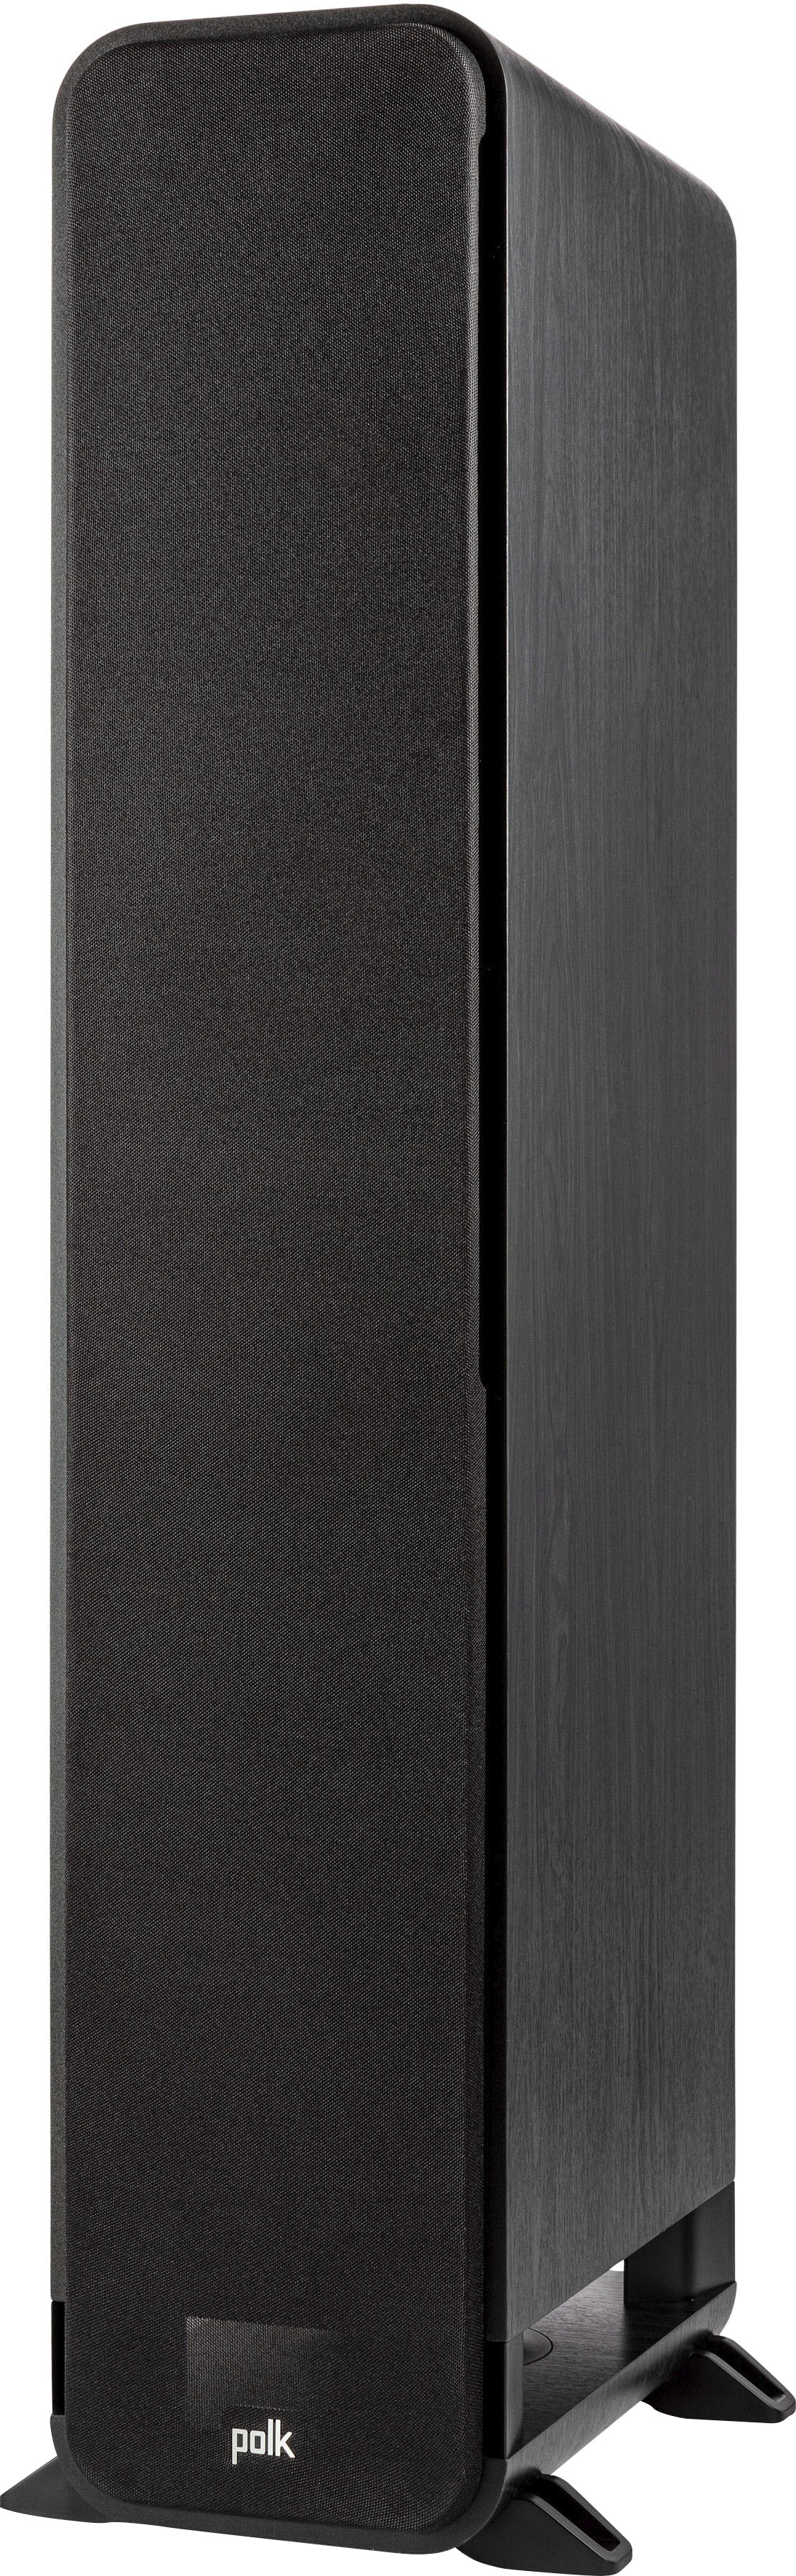 Angle View: Polk Audio - Signature Elite ES60 Hi-Res Tower Speaker - Stunning Black